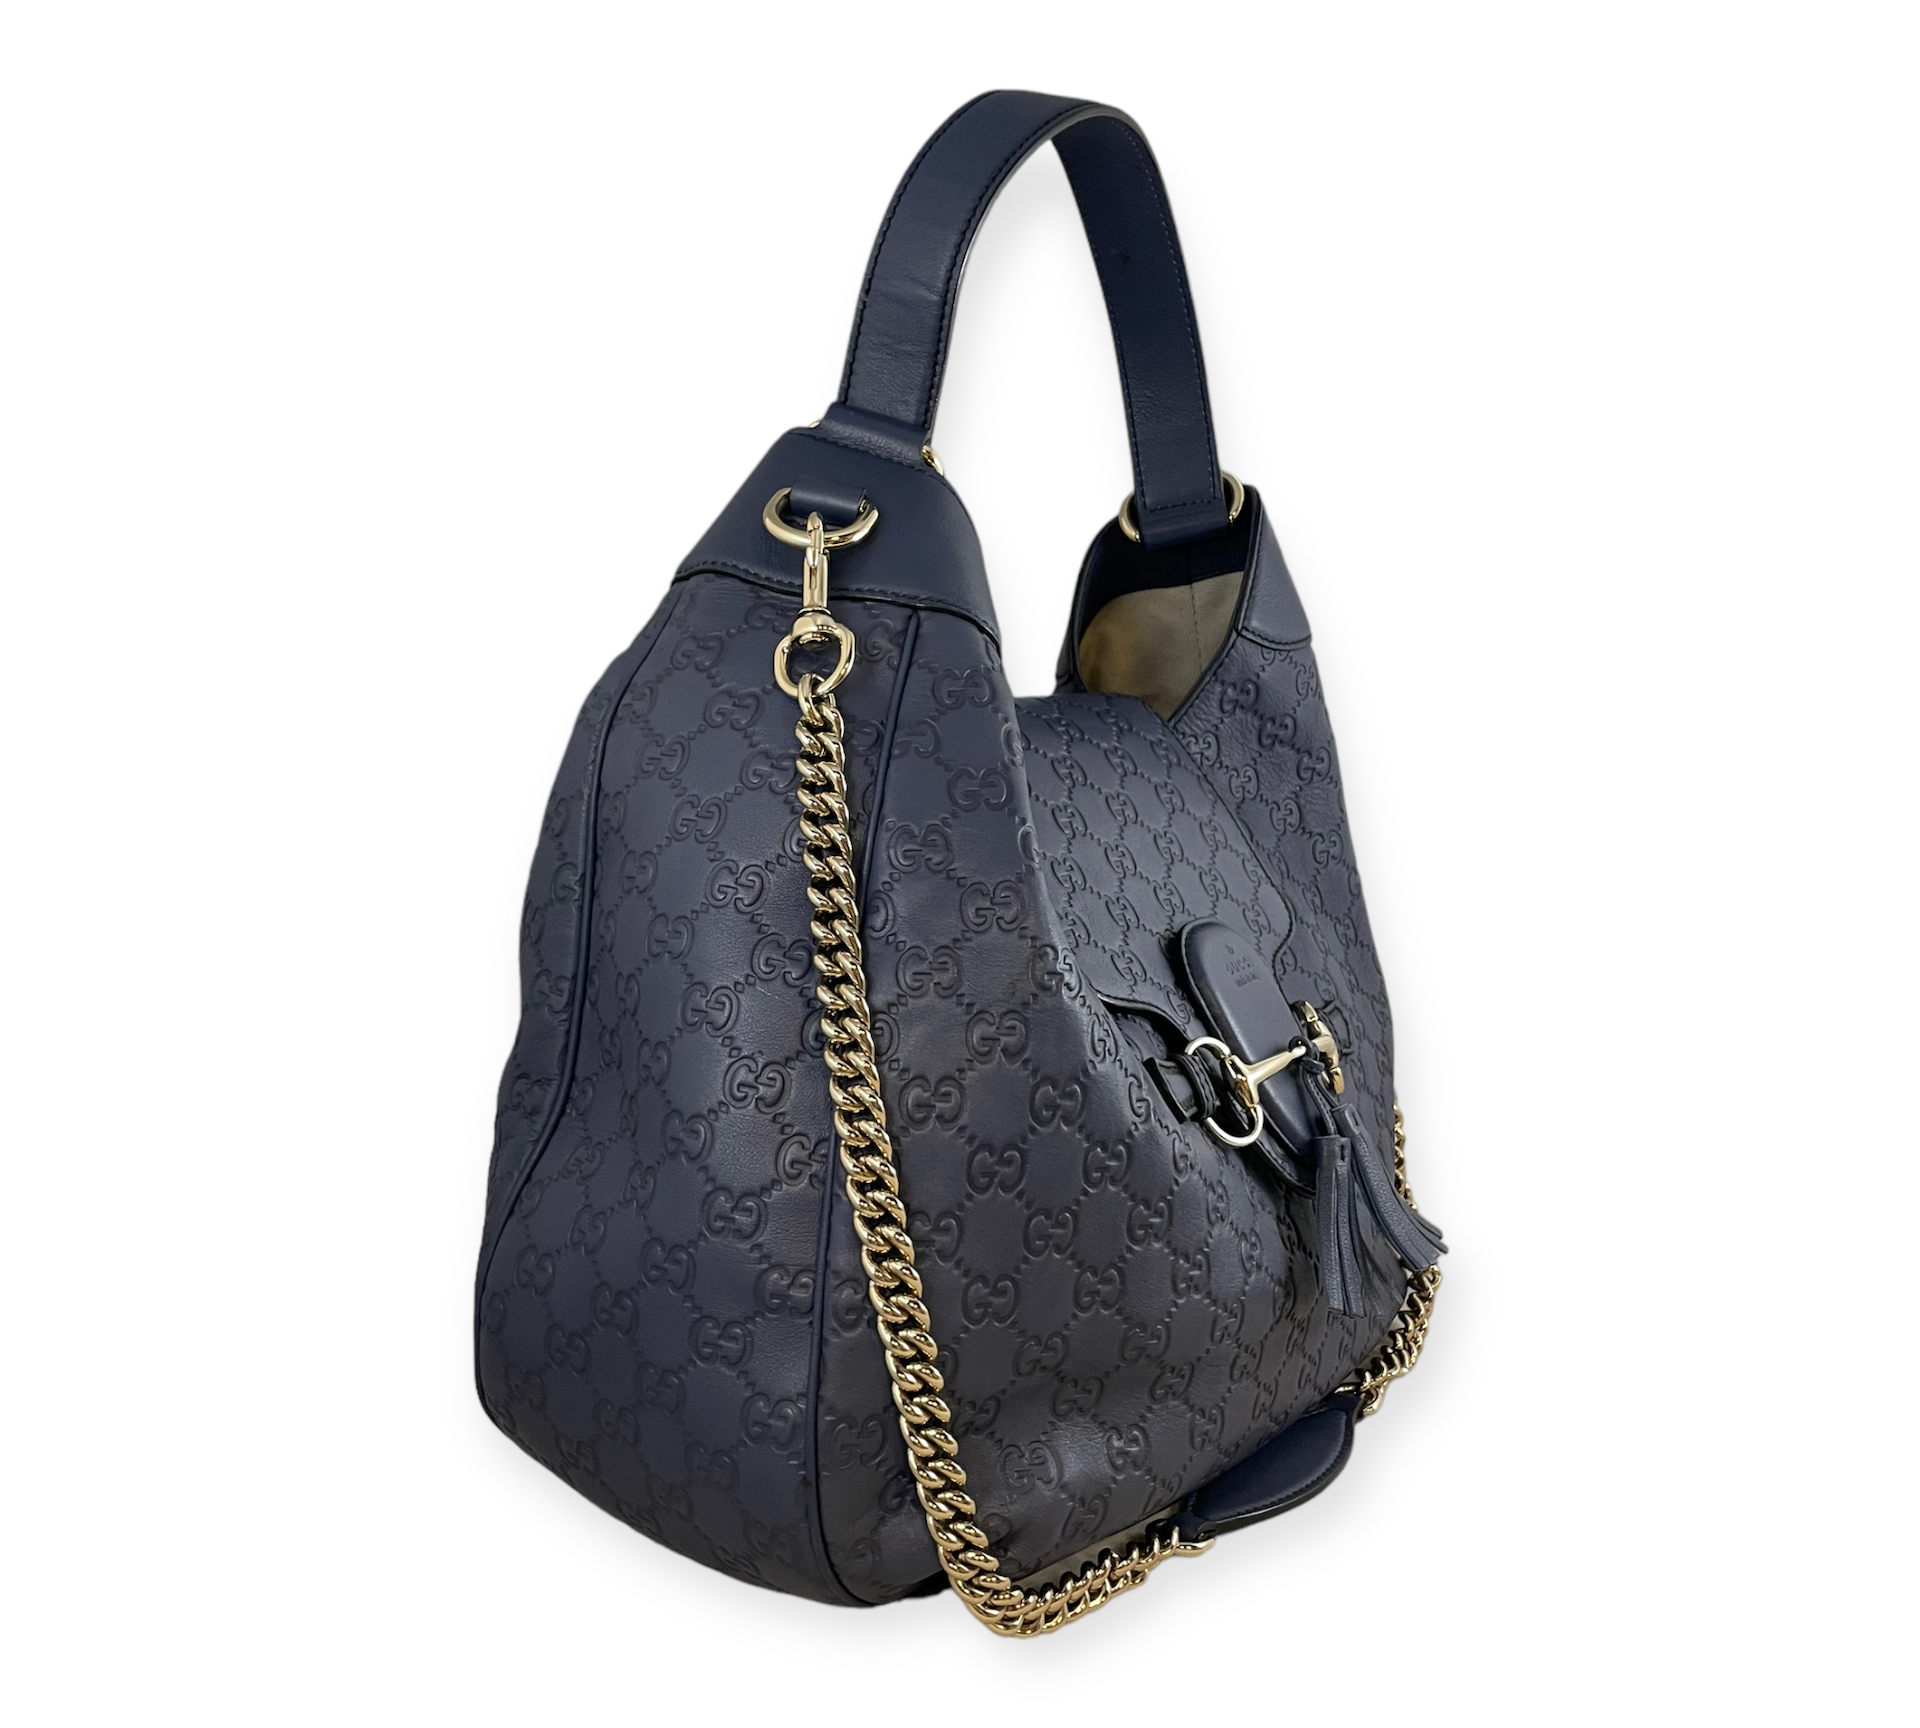 Gucci, Bags, Black Gucci Guccissima Hobo Handbag